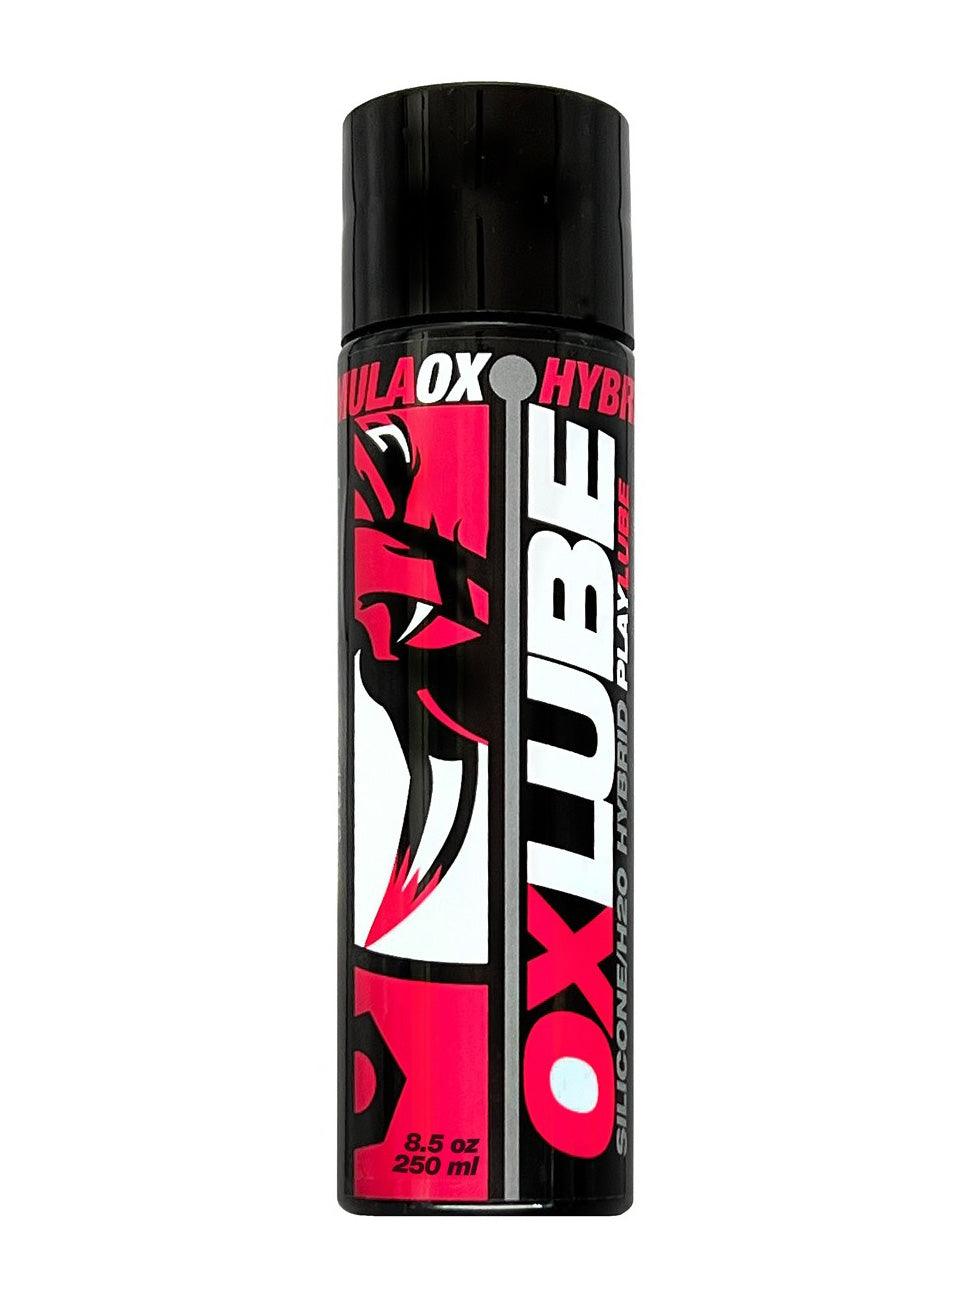 OXBALLS FORMULAOX HYBRID OXLUBE 8.5 oz - FullKit.com